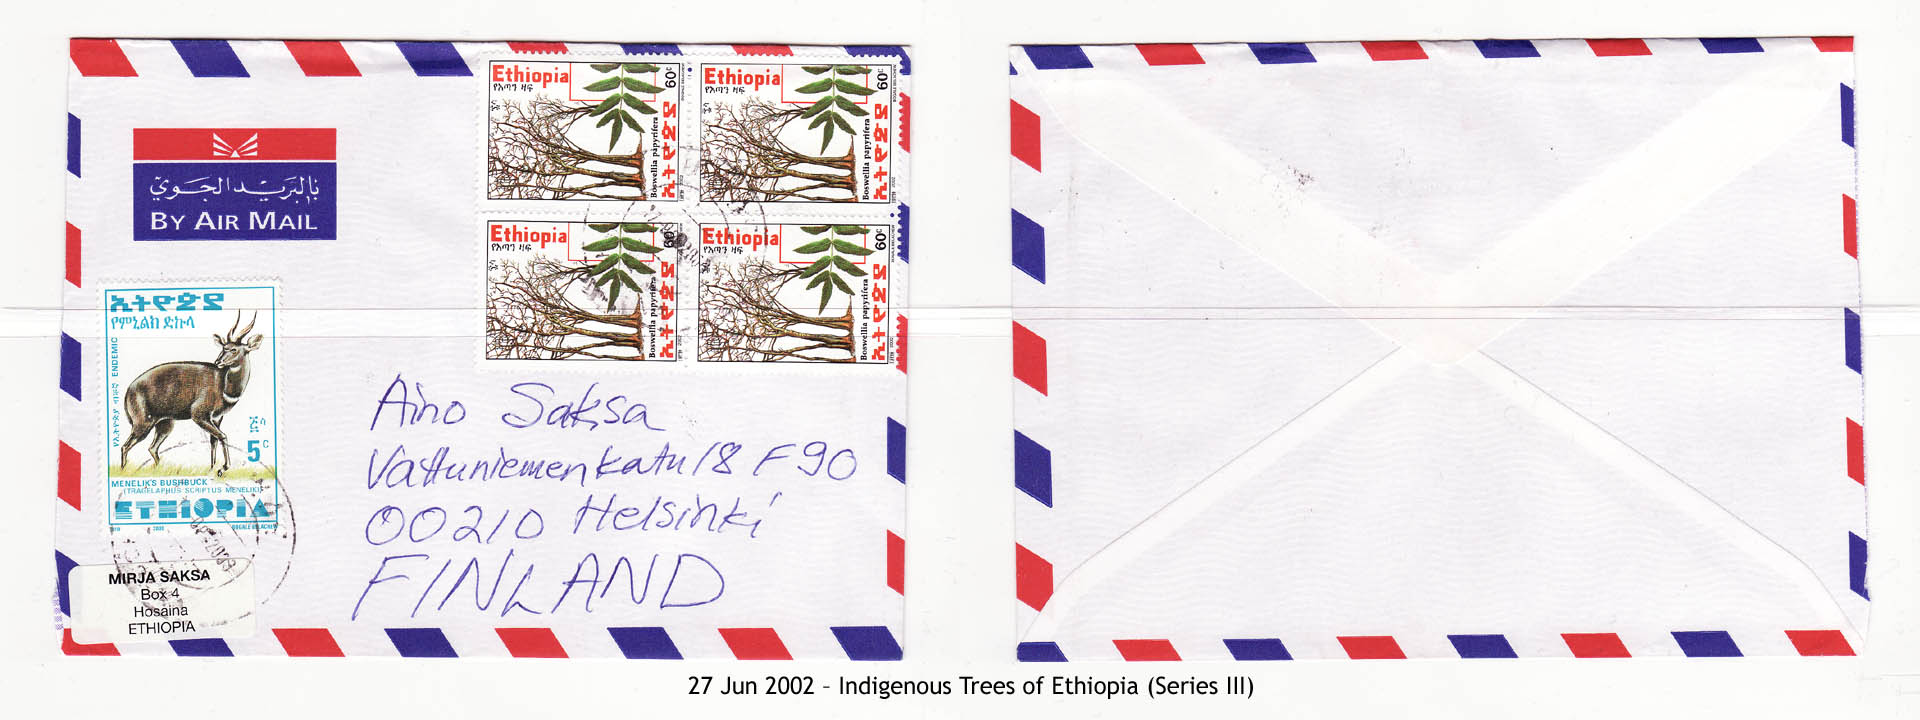 20020627 – Indigenous Trees of Ethiopia (Series III)